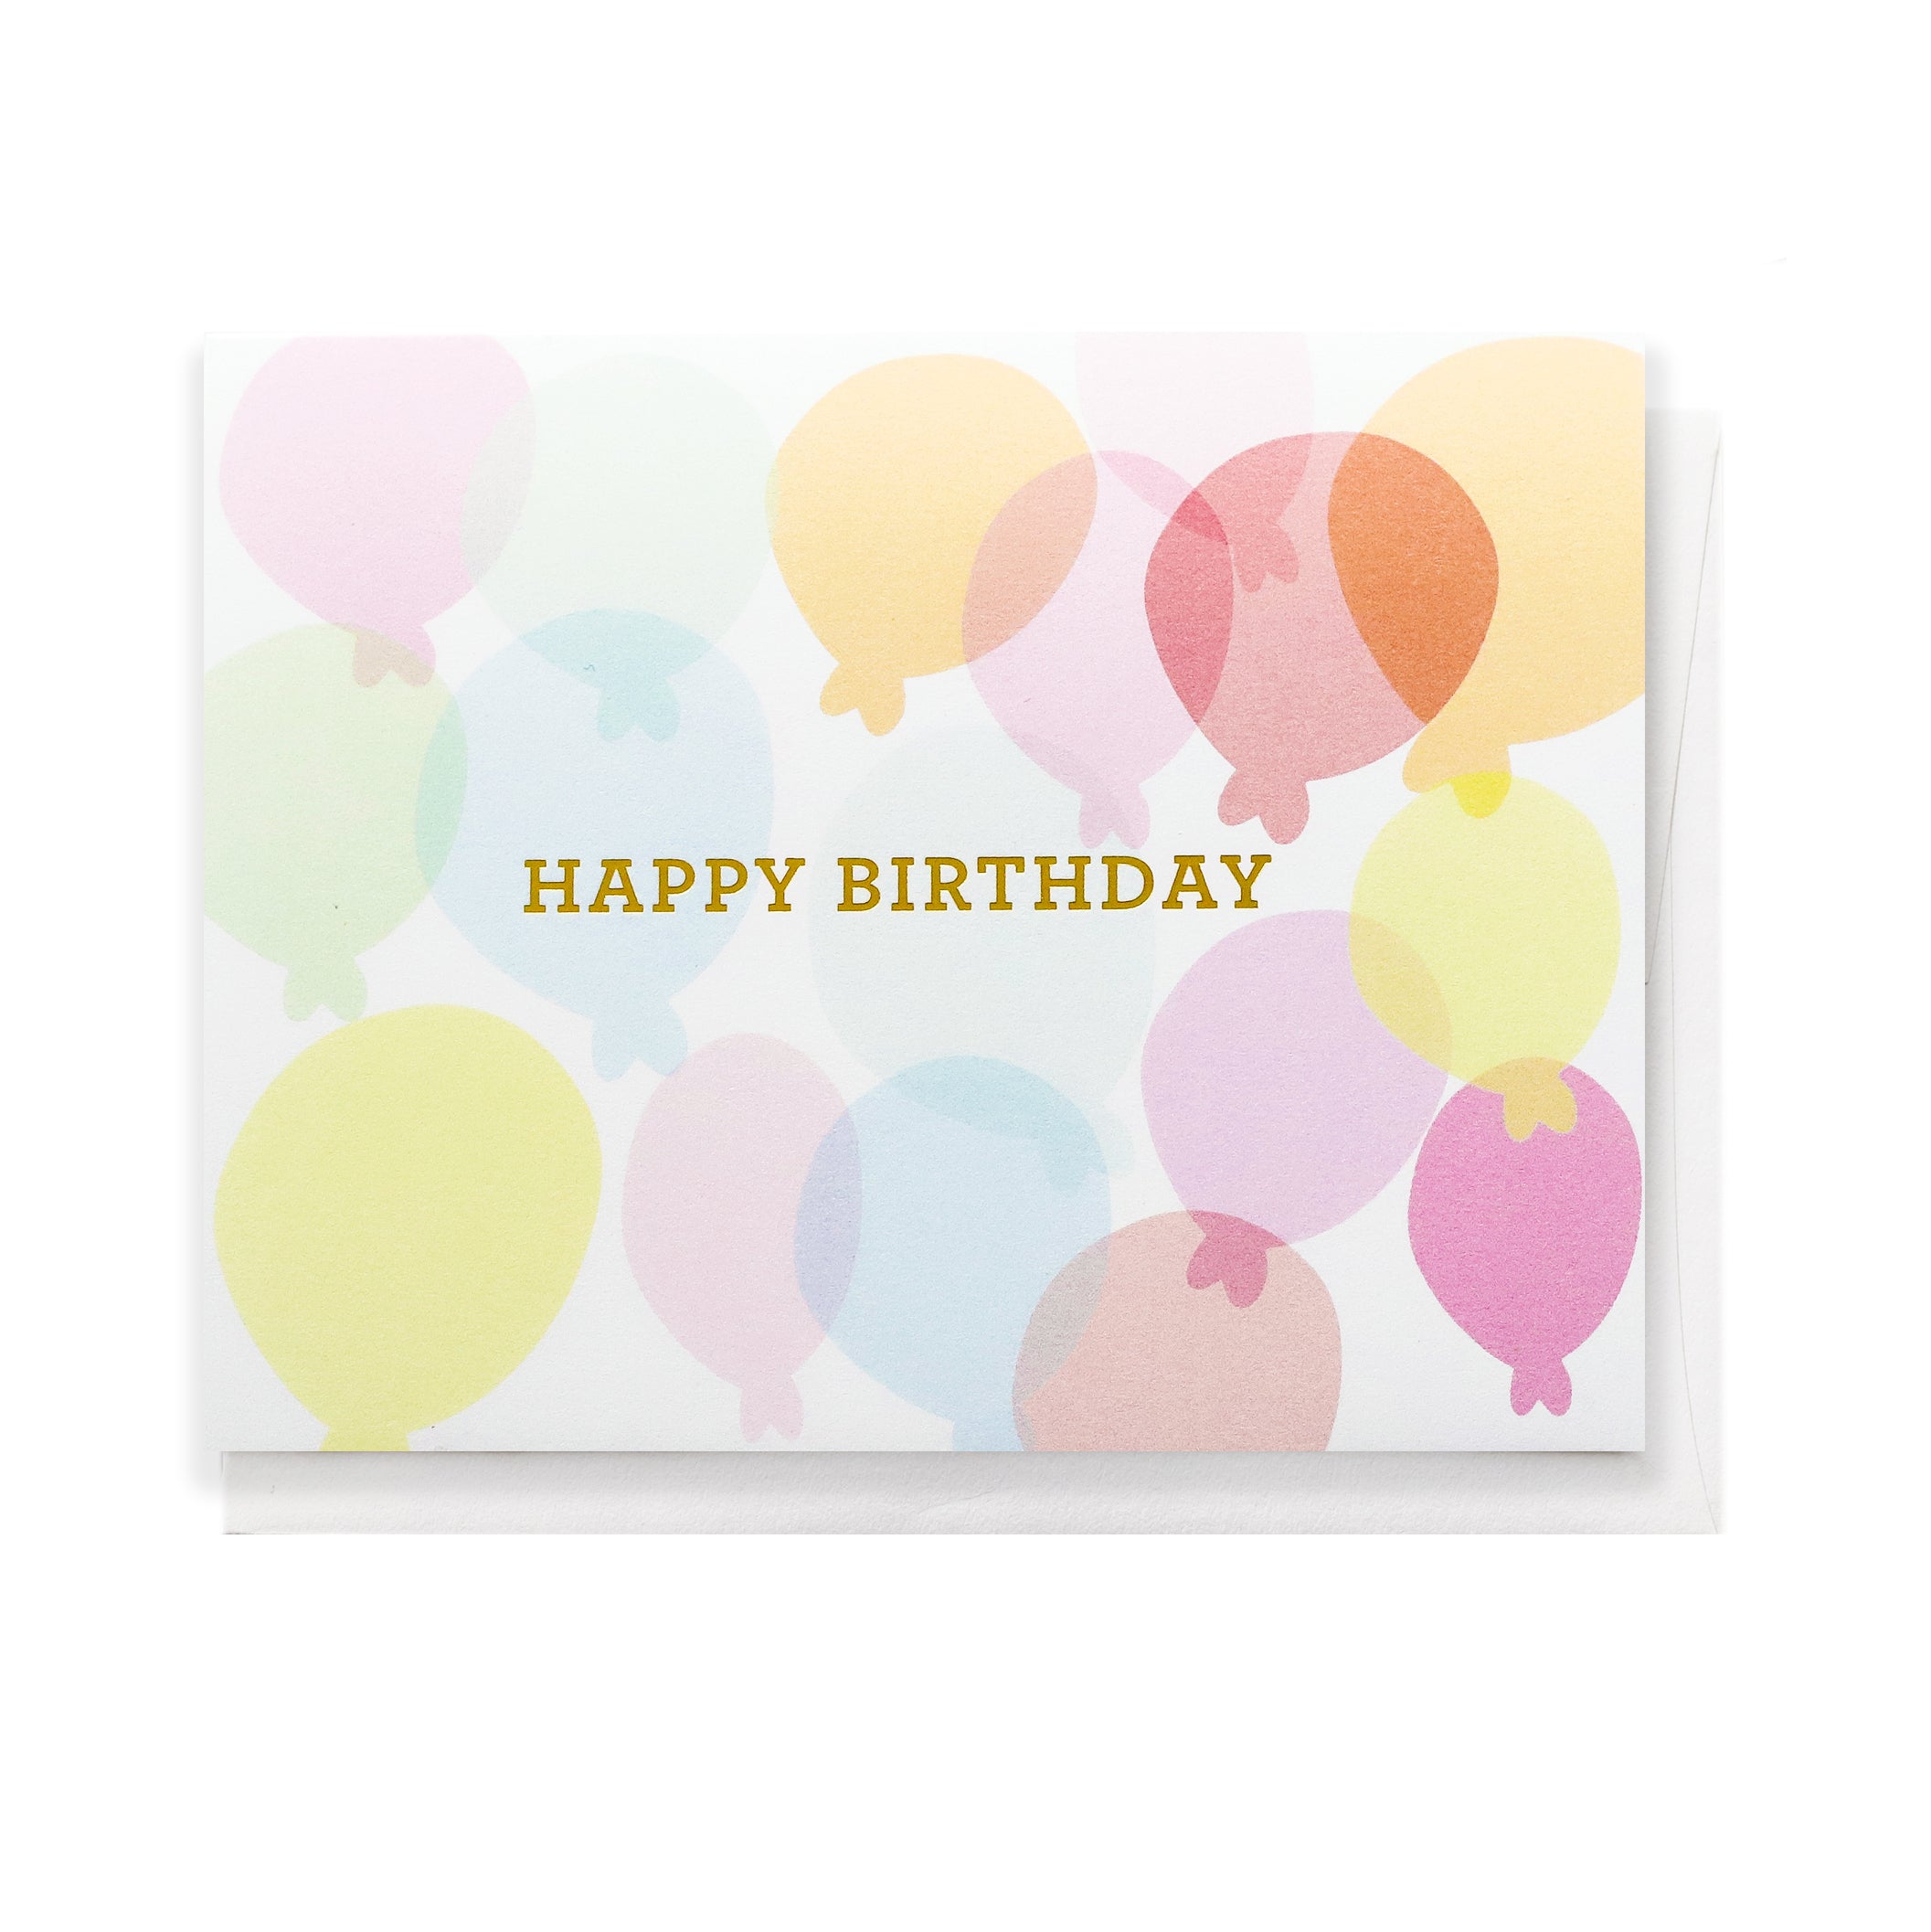 Happy Birthday Balloons, Greeting Card